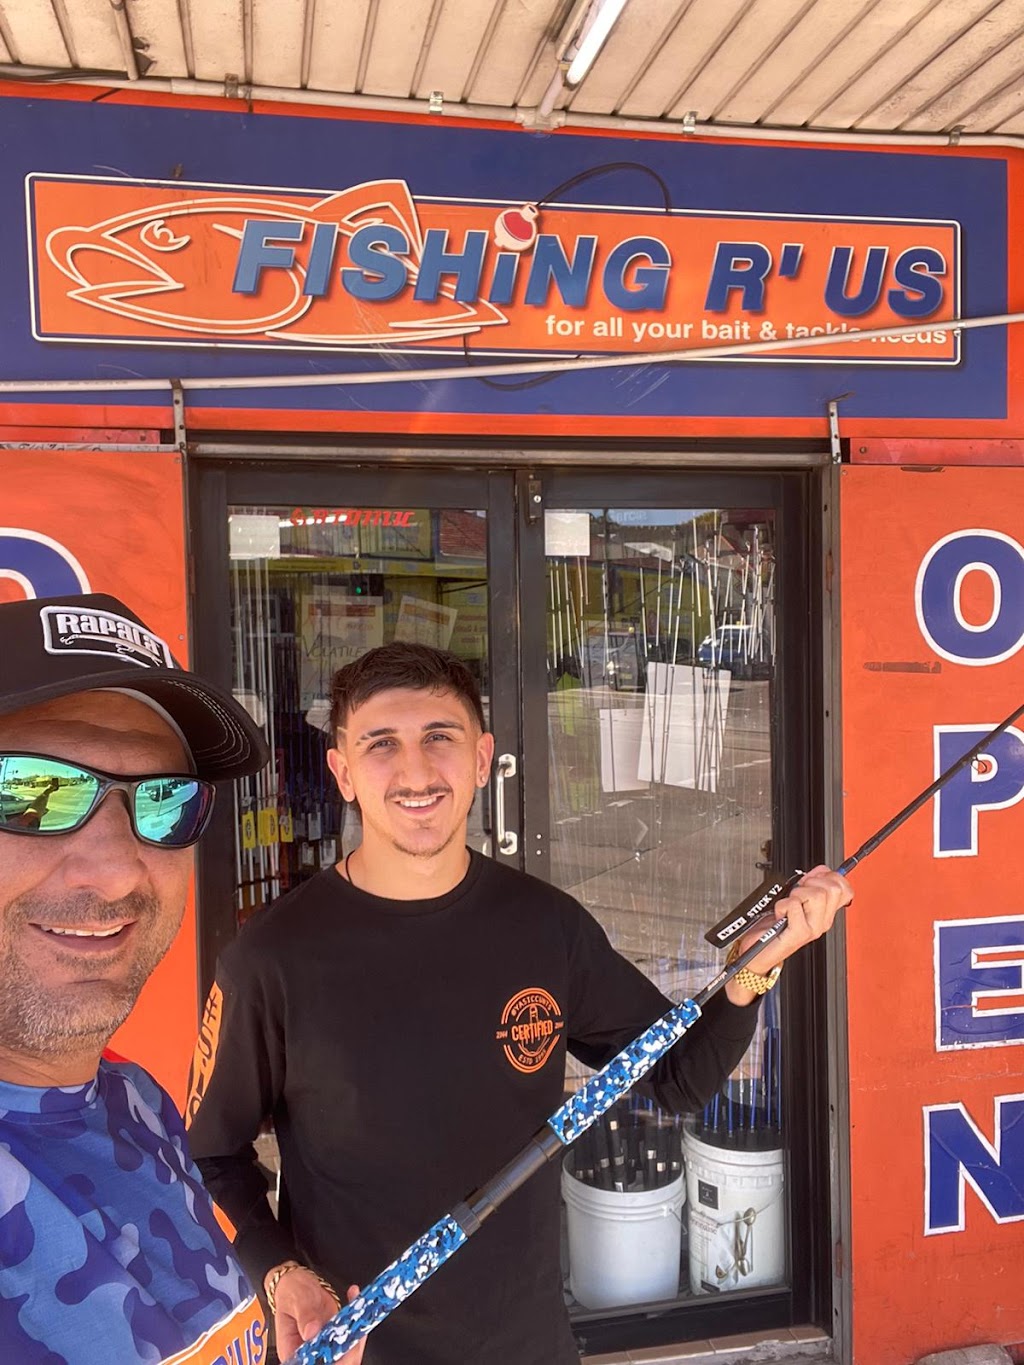 Fishing R Us Pty Ltd | store | 133 Parramatta Rd, Auburn NSW 2144, Australia | 0297370117 OR +61 2 9737 0117